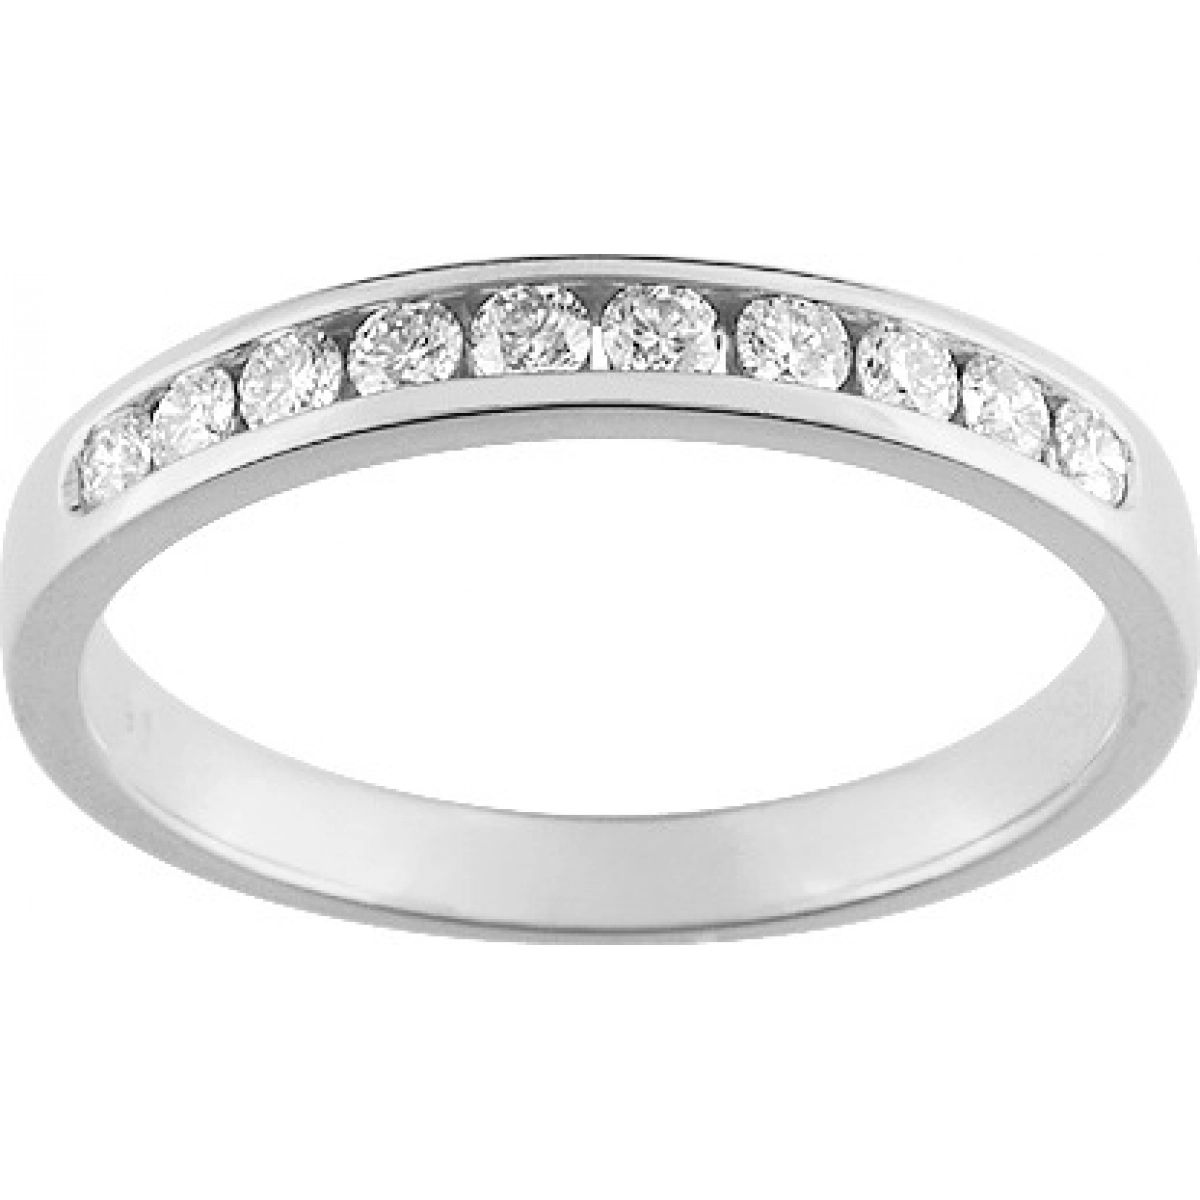 Wedding ring w. 10 diam 0.30ct GHSI 18K WG - Size: 49  Lua Blanca  3L026GB2.9